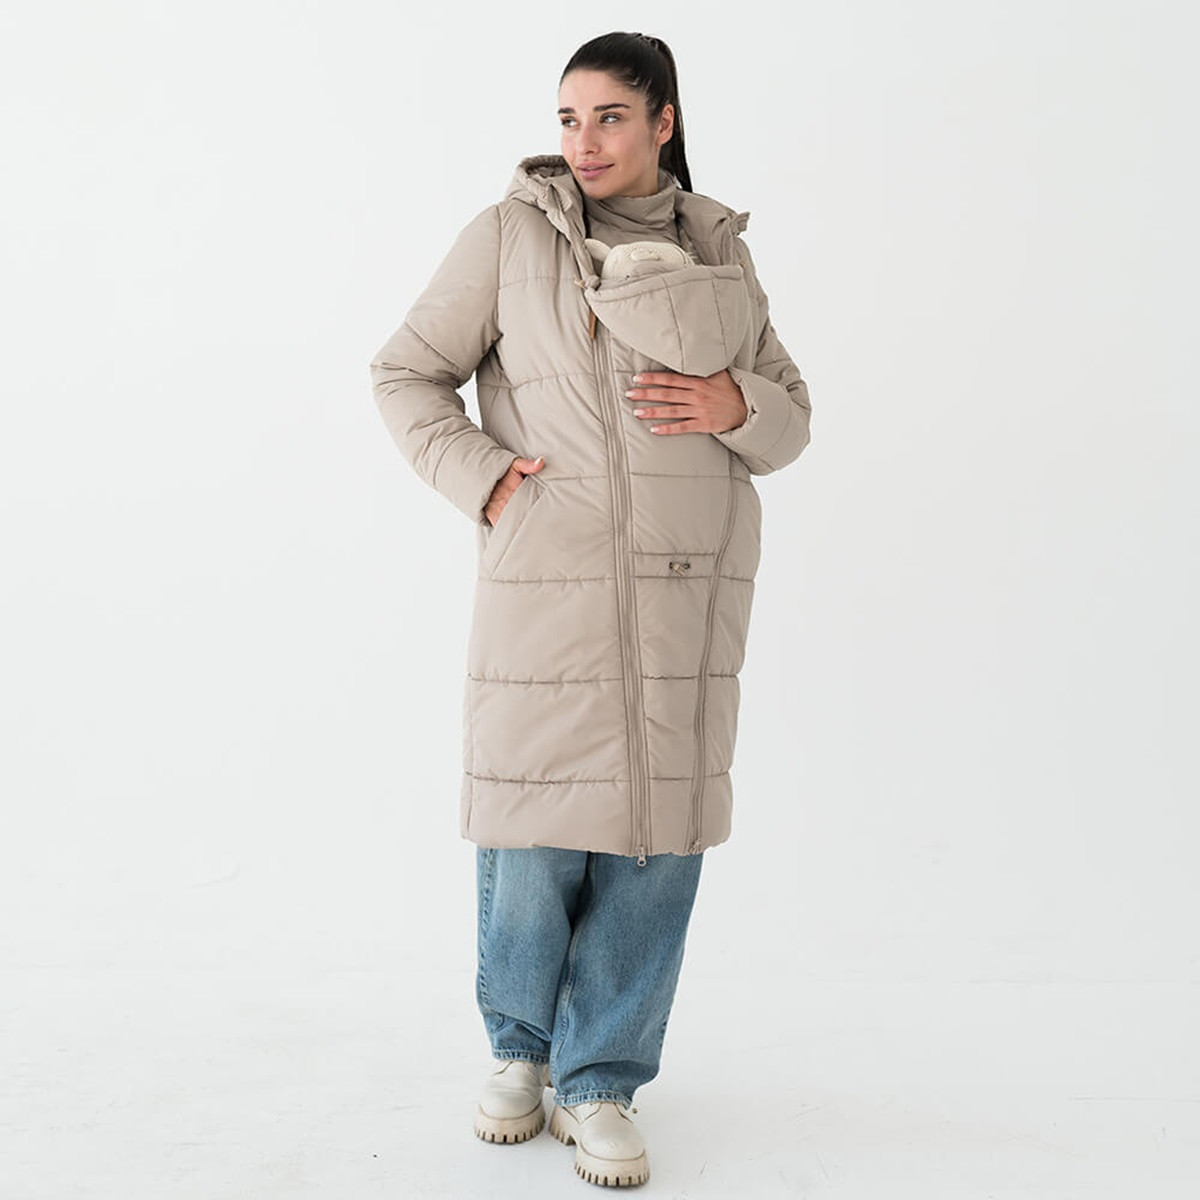 LILY-manteau portage - KAKI -seraphine